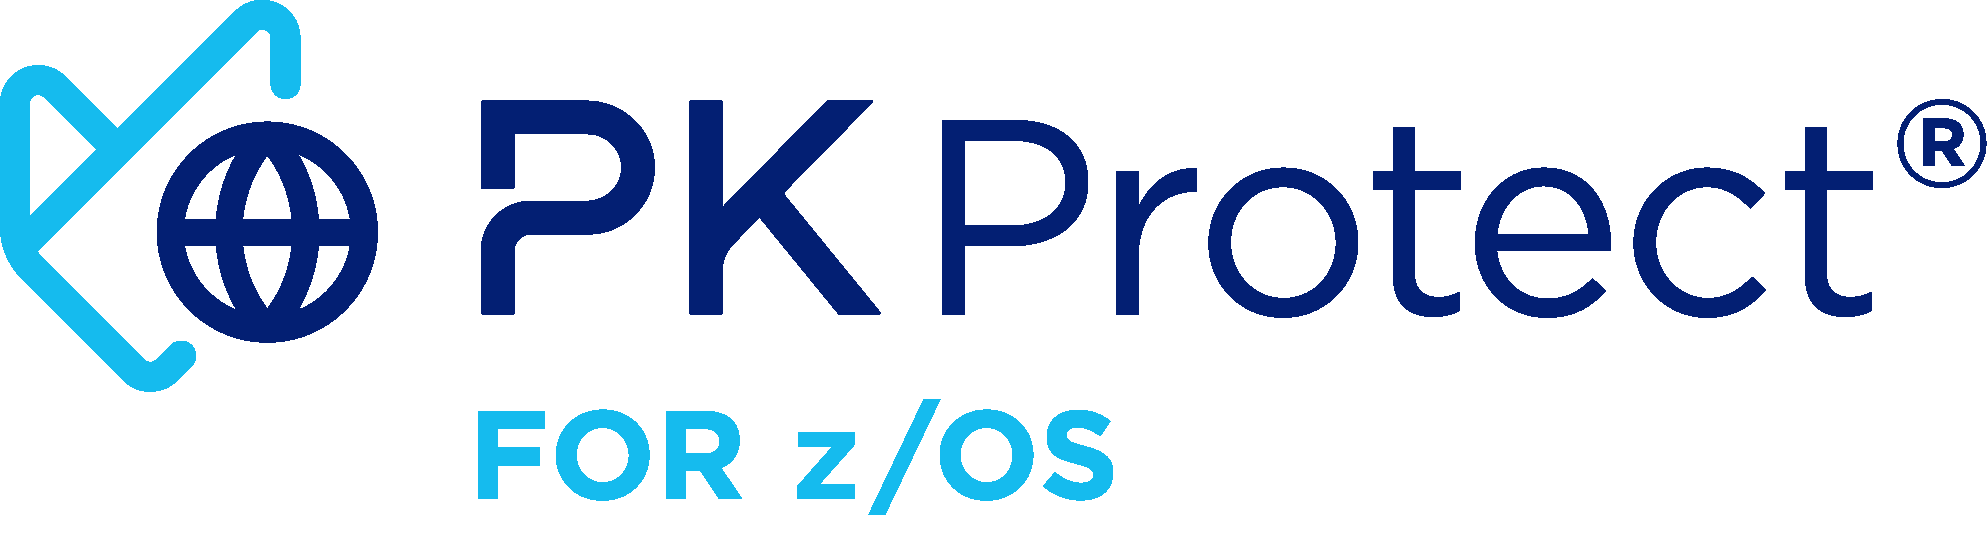 PK Protect for z/OS logo